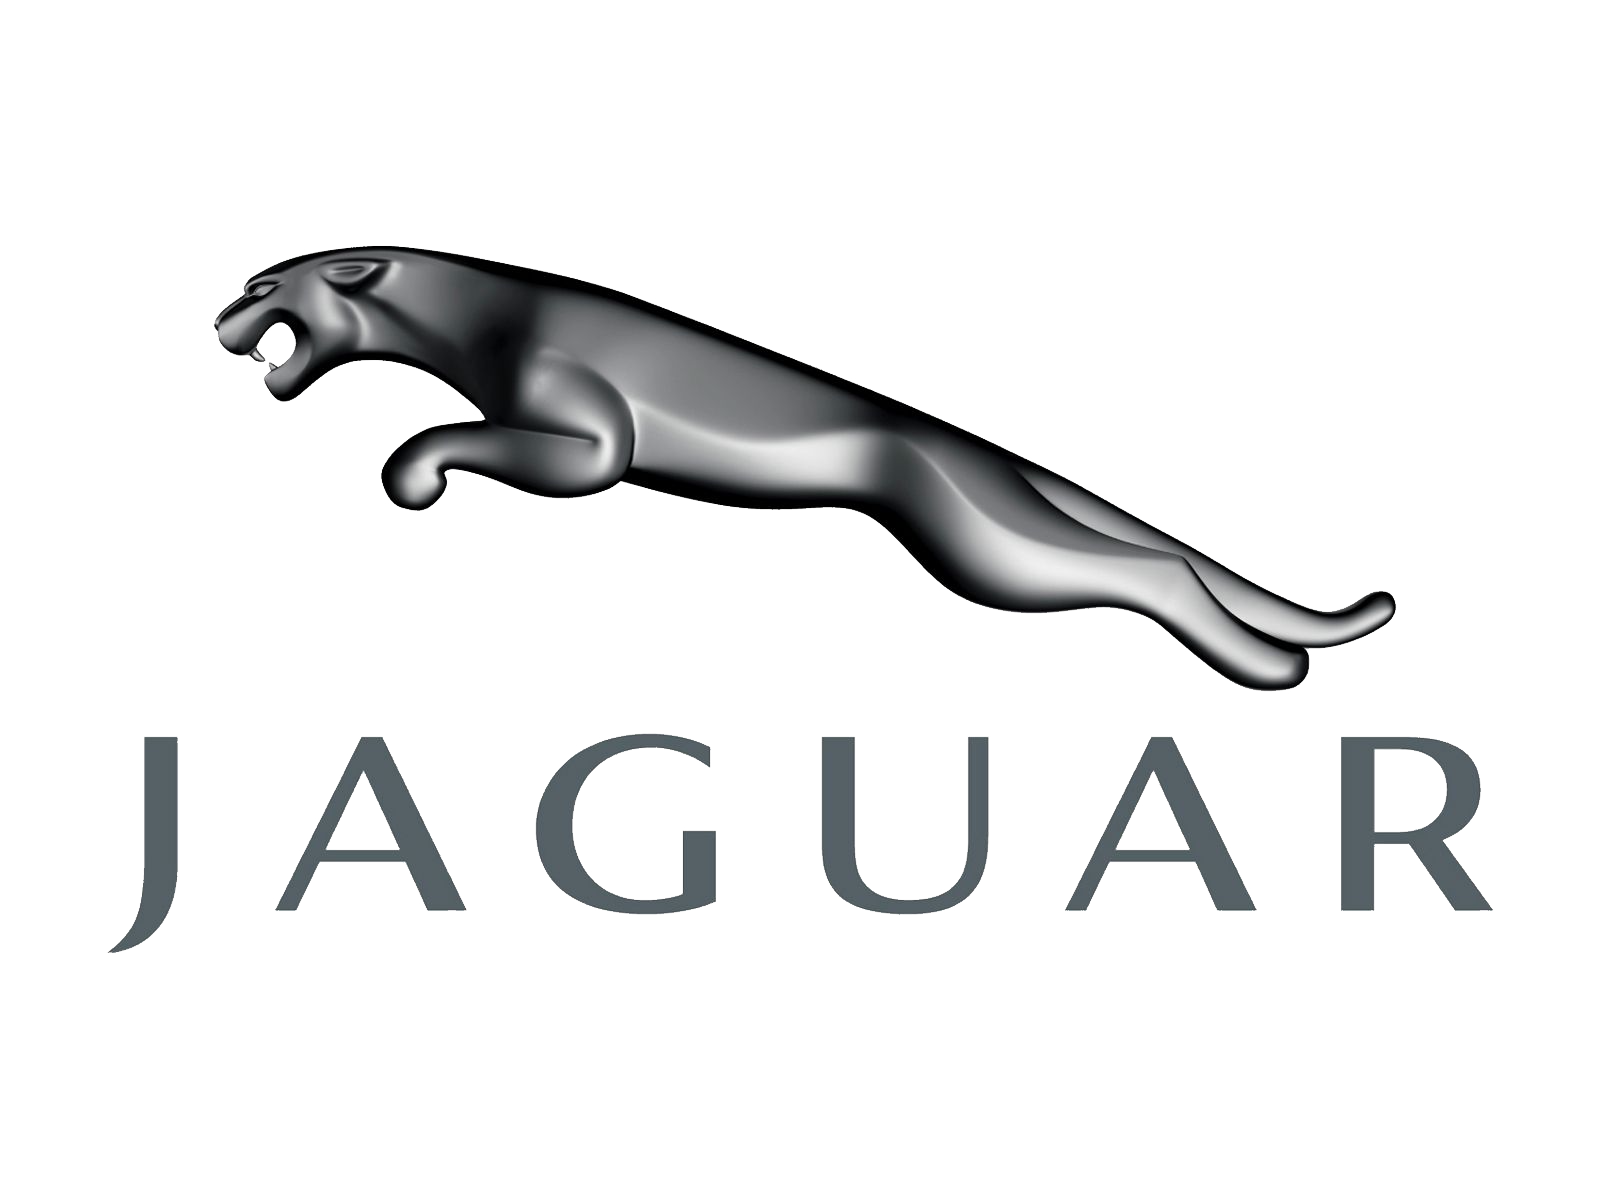 Jaguar car logo PNG brand image